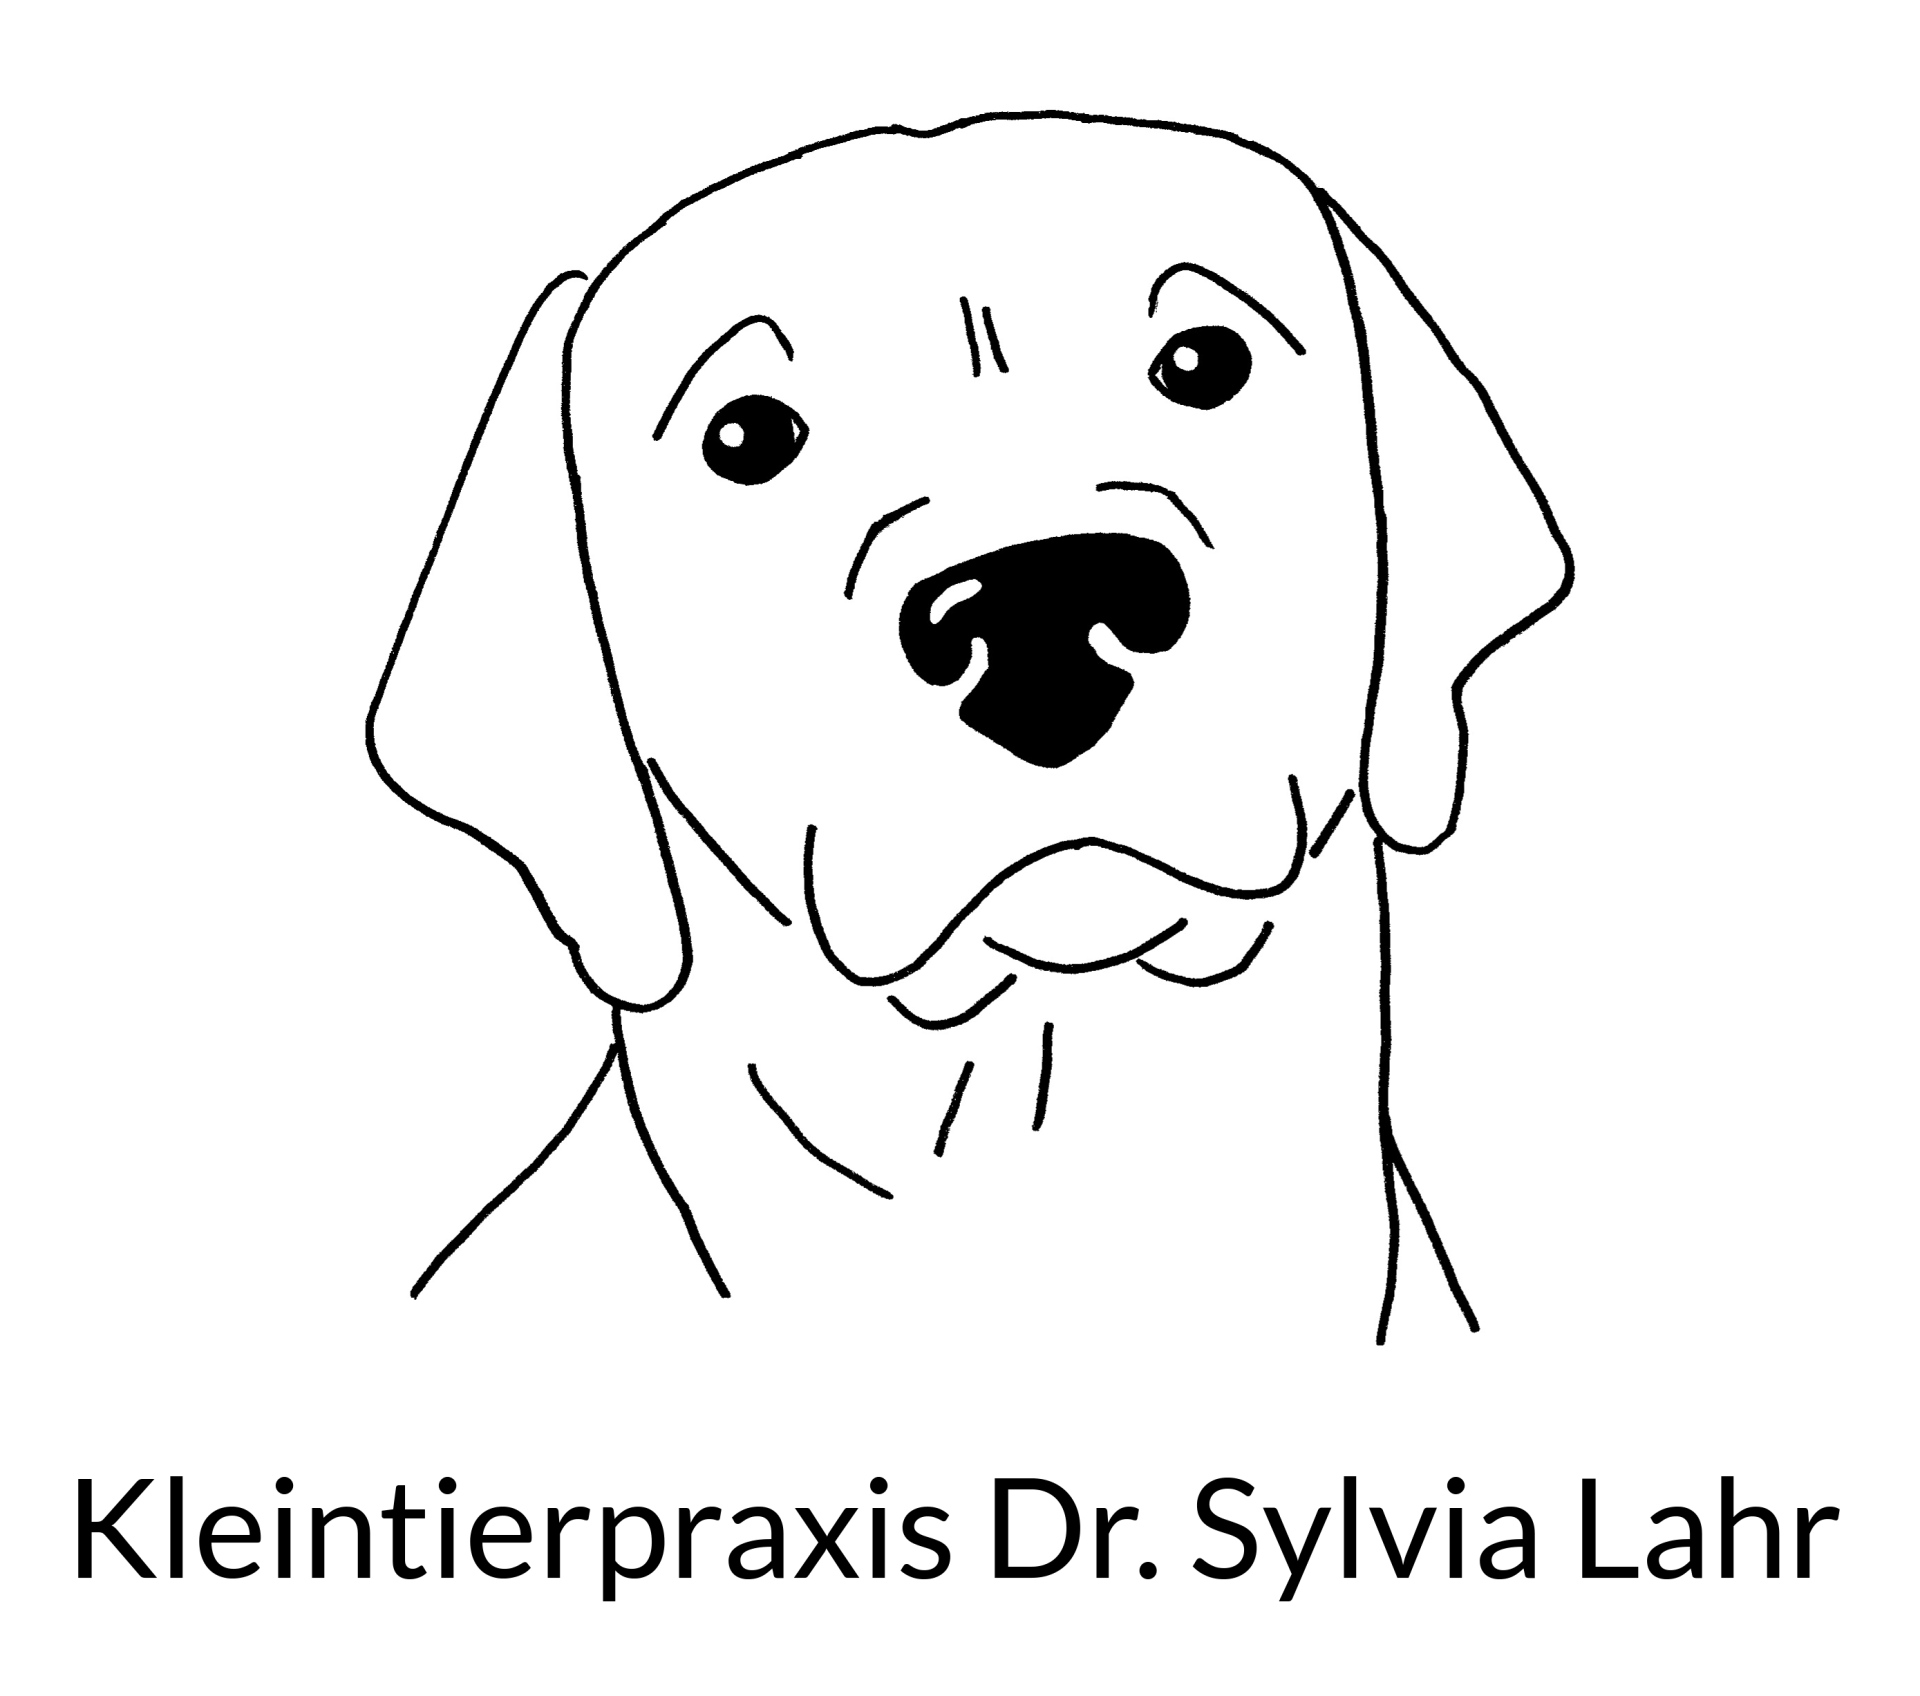 Kleintierpraxis Dr. Sylvia Lahr